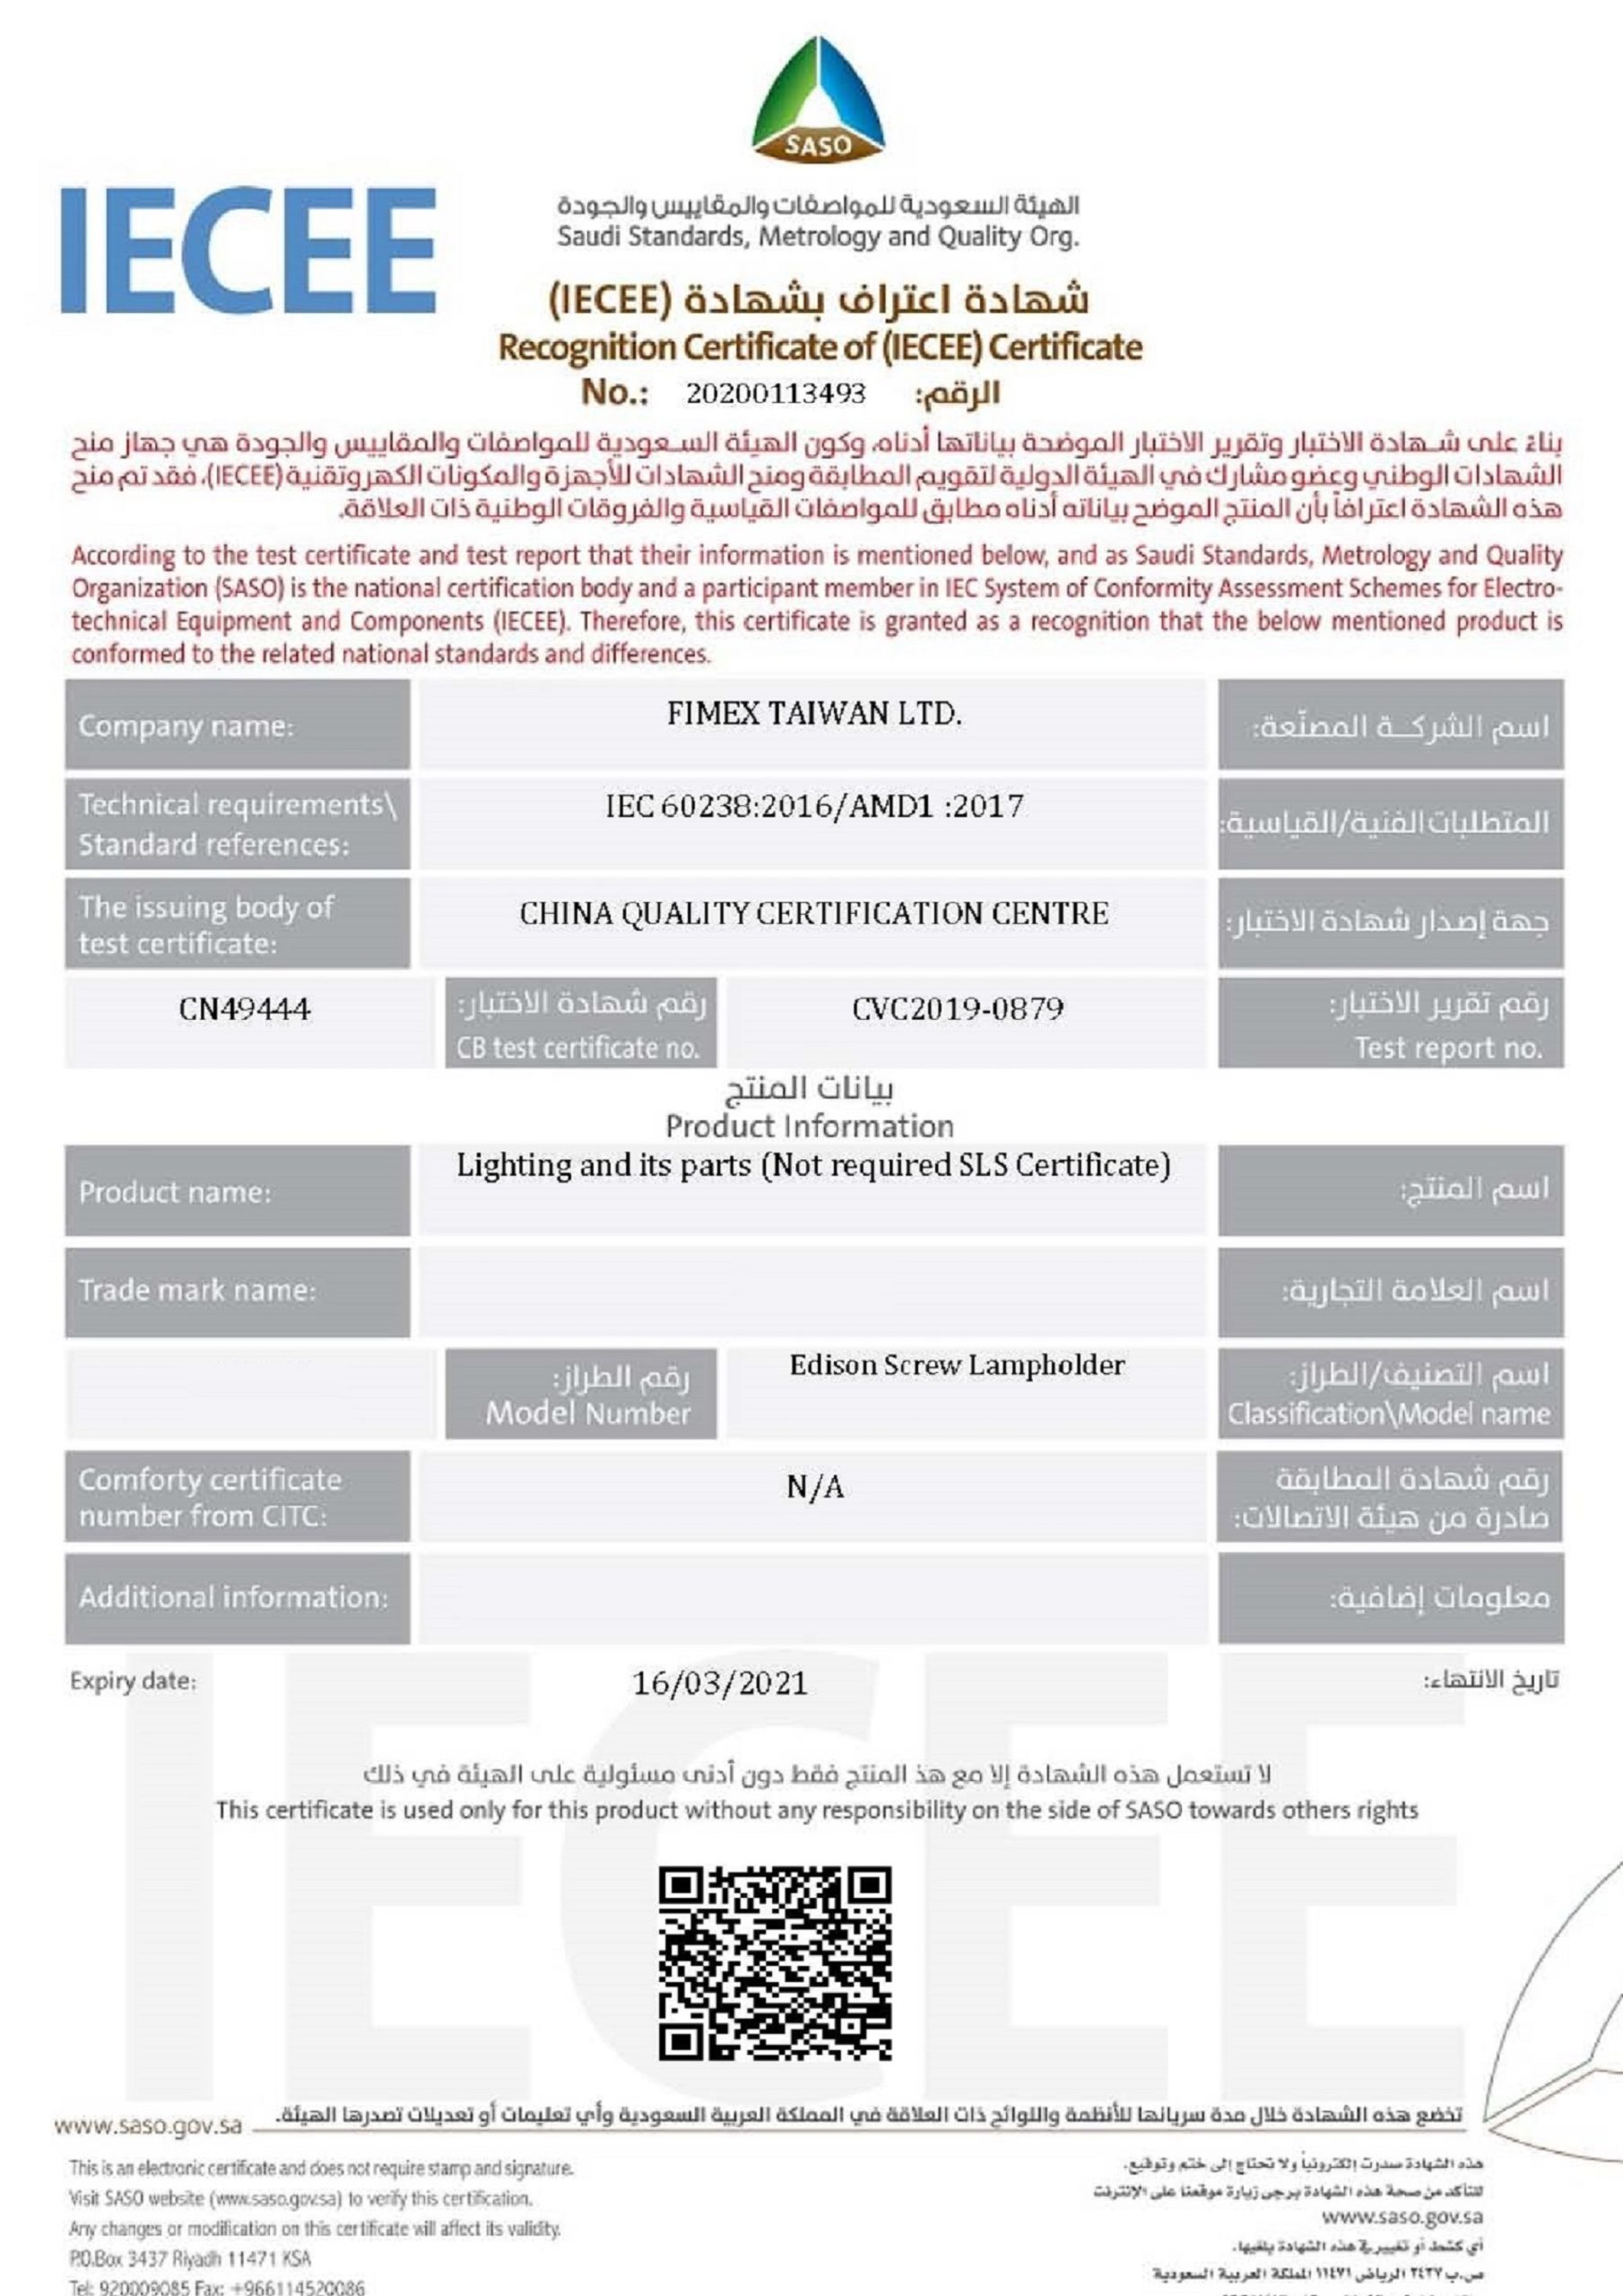 And saso الهيئة quality standards, metrology للمواصفات saudi والمقاييس org. السعودية والجودة Fotos en